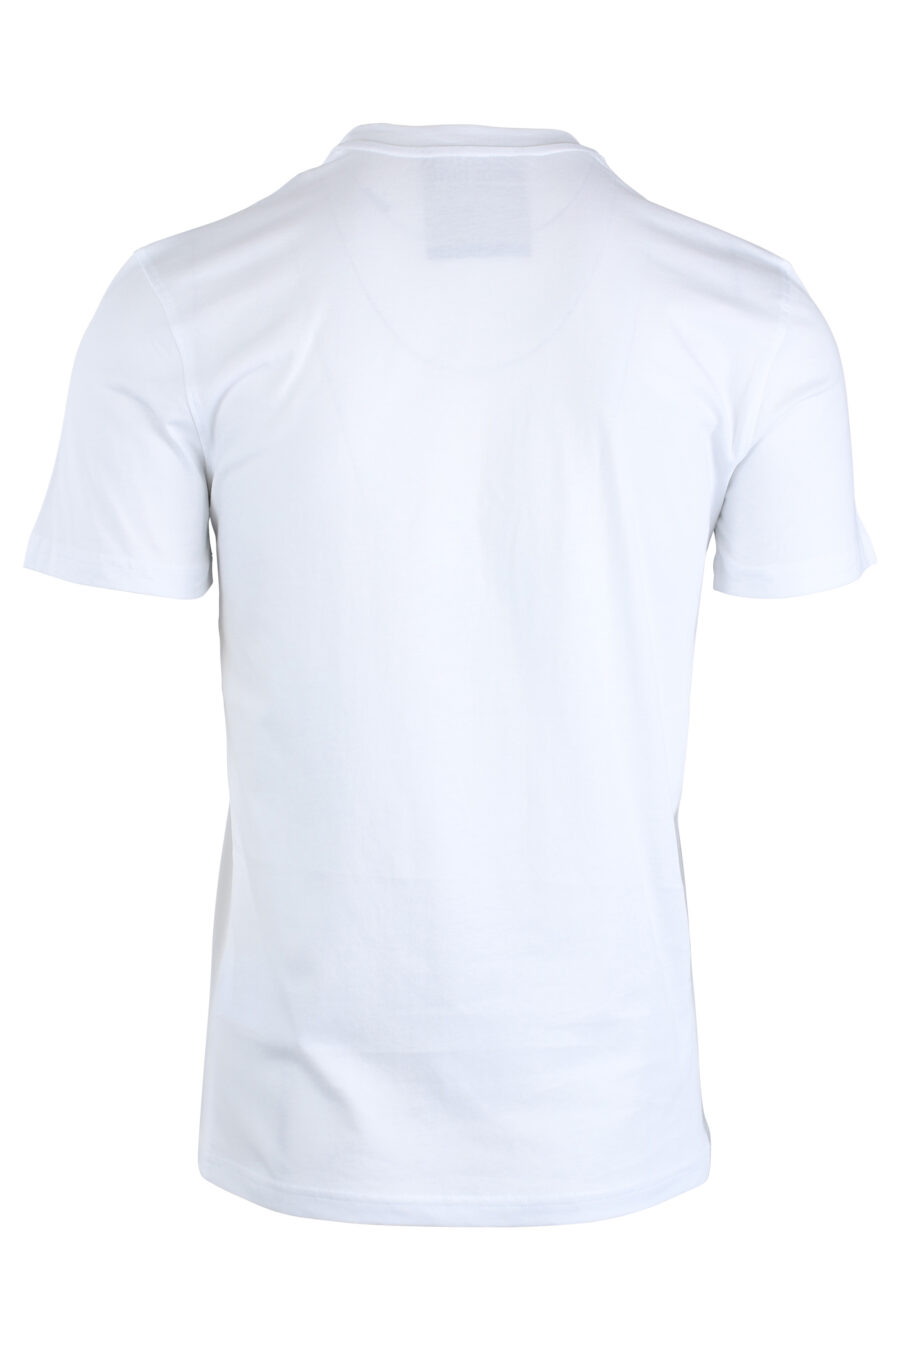 White T-shirt with black stripe logo - IMG 1687